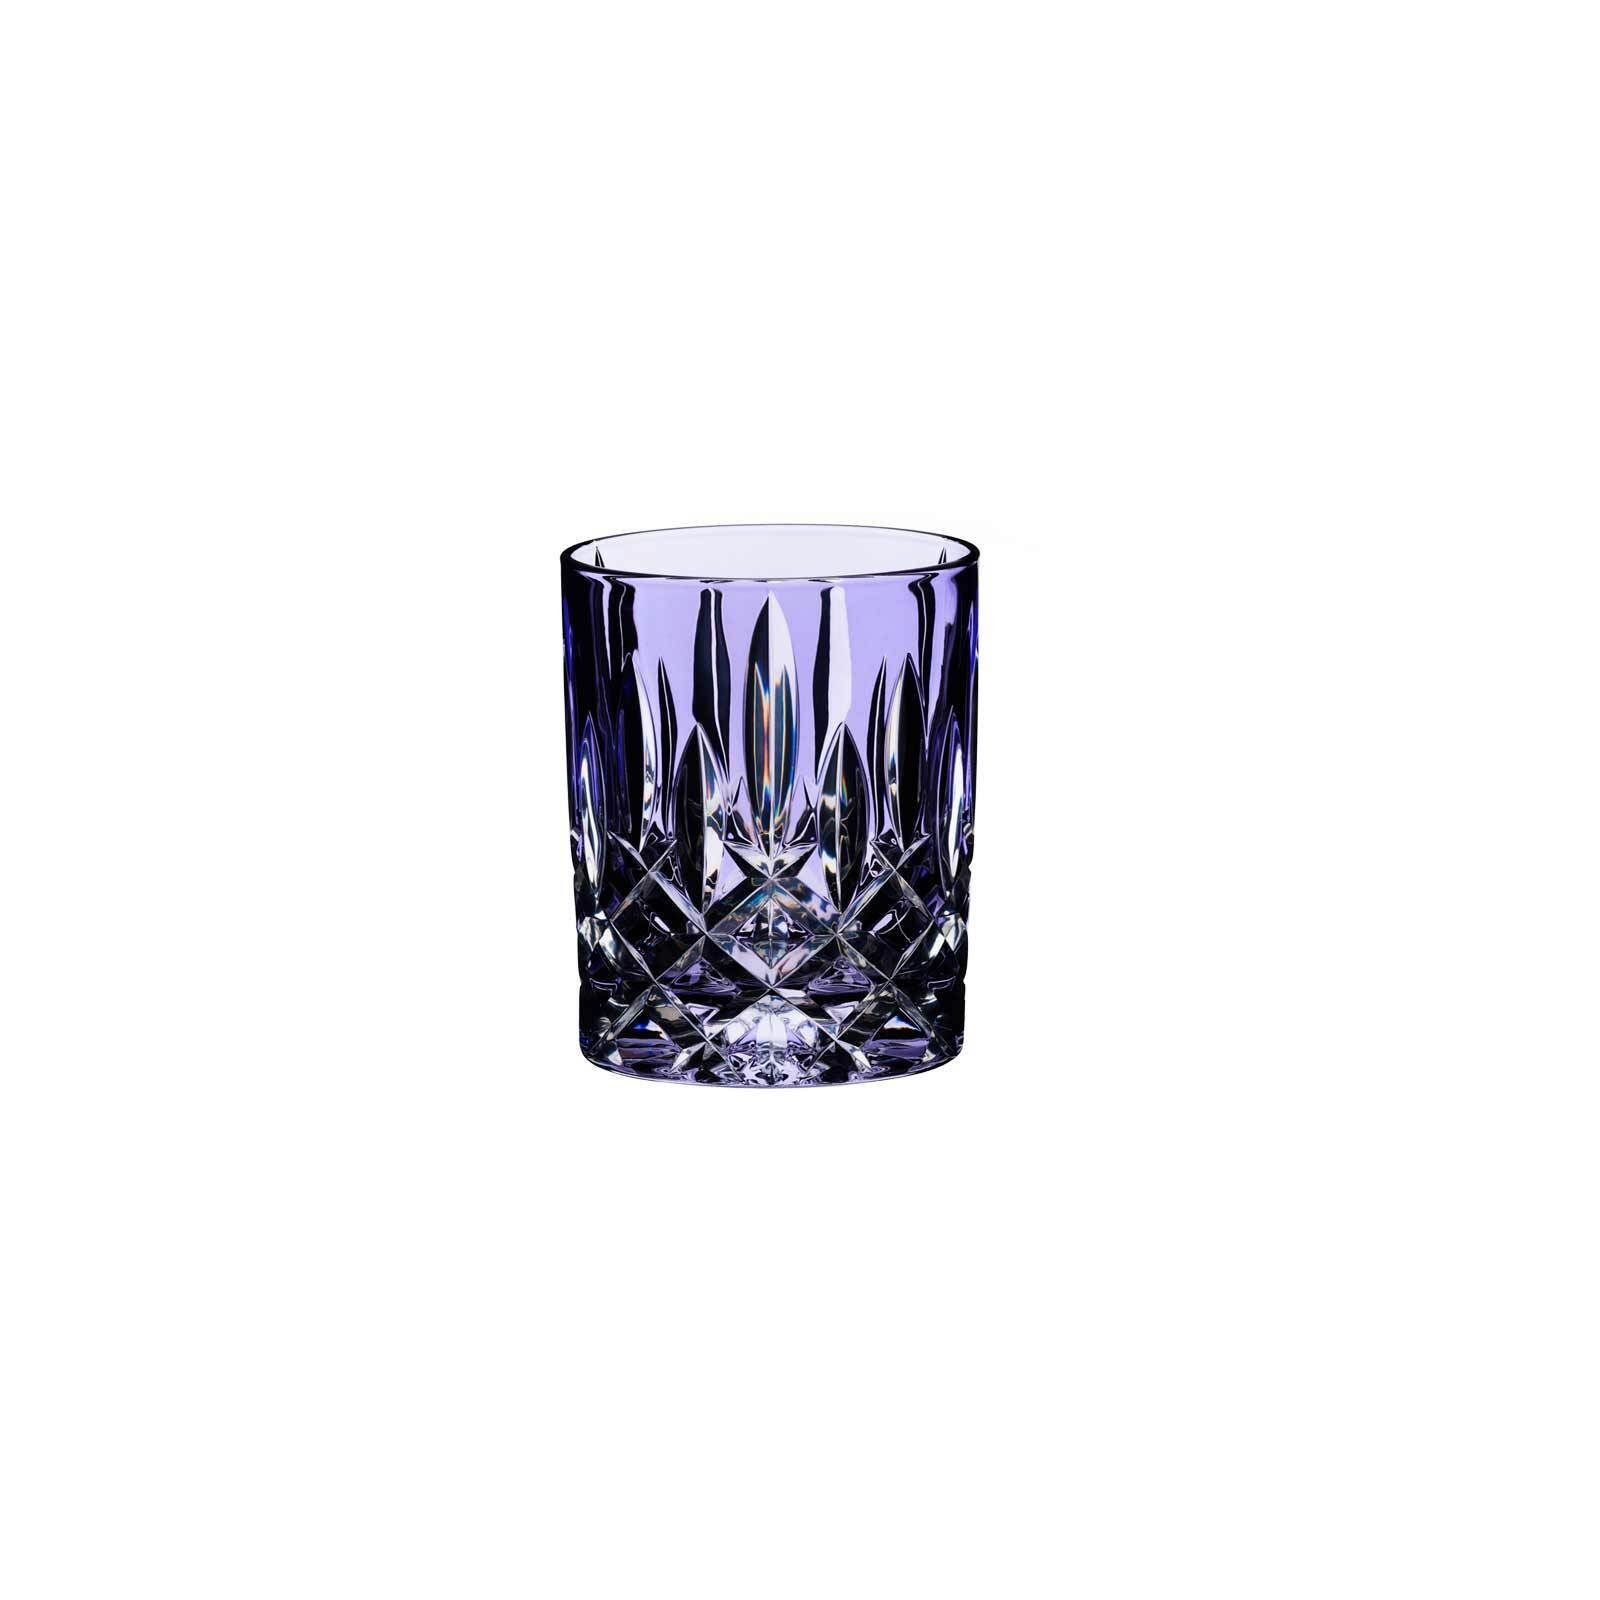 RIEDEL Glas Whiskyglas Laudon Whiskyglas ml, Glas Violett 295